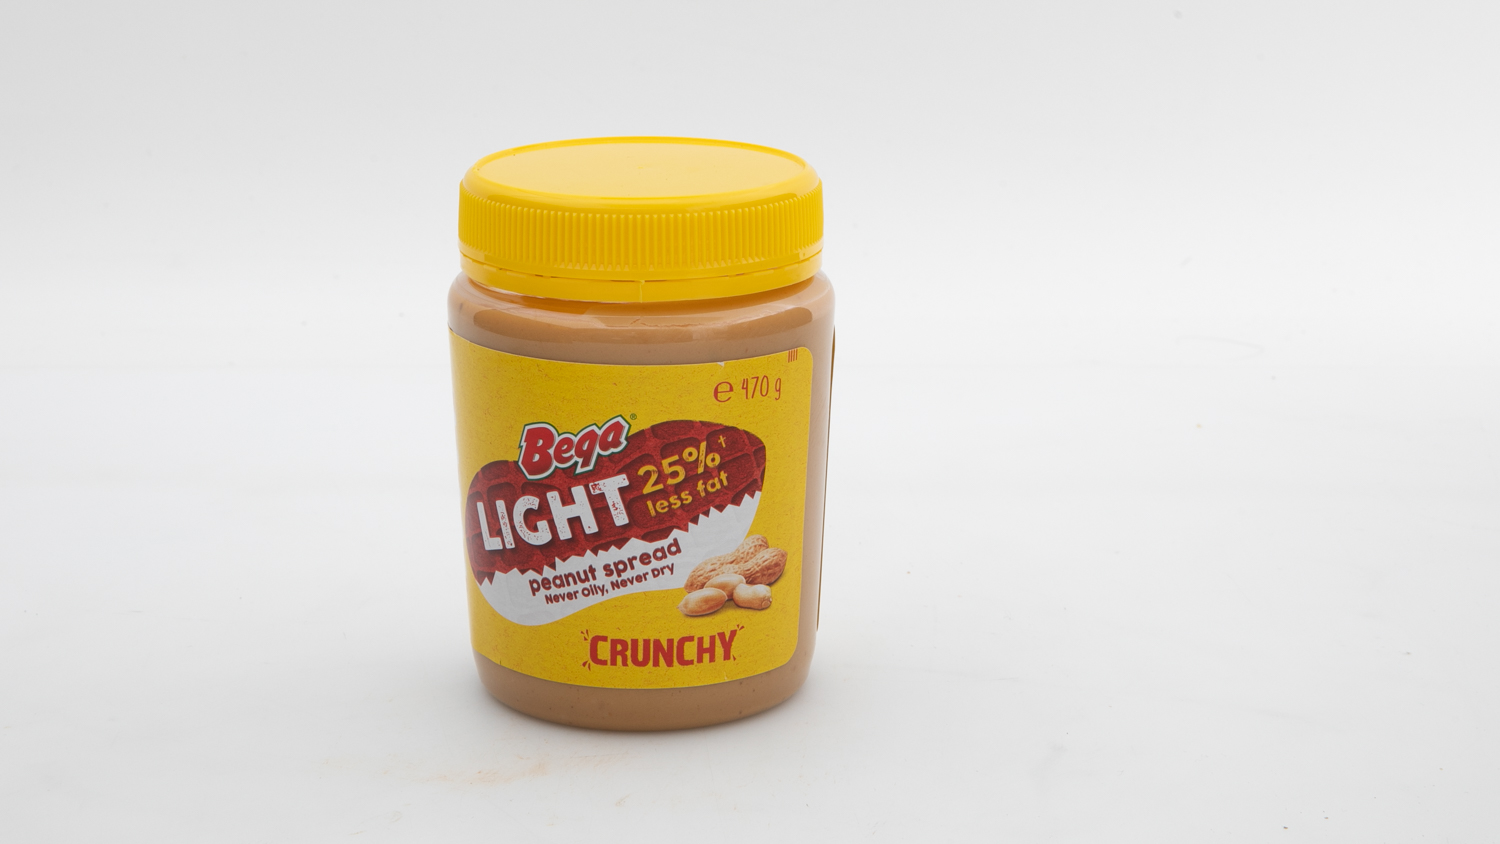 Bega Light Peanut Spread Crunchy carousel image